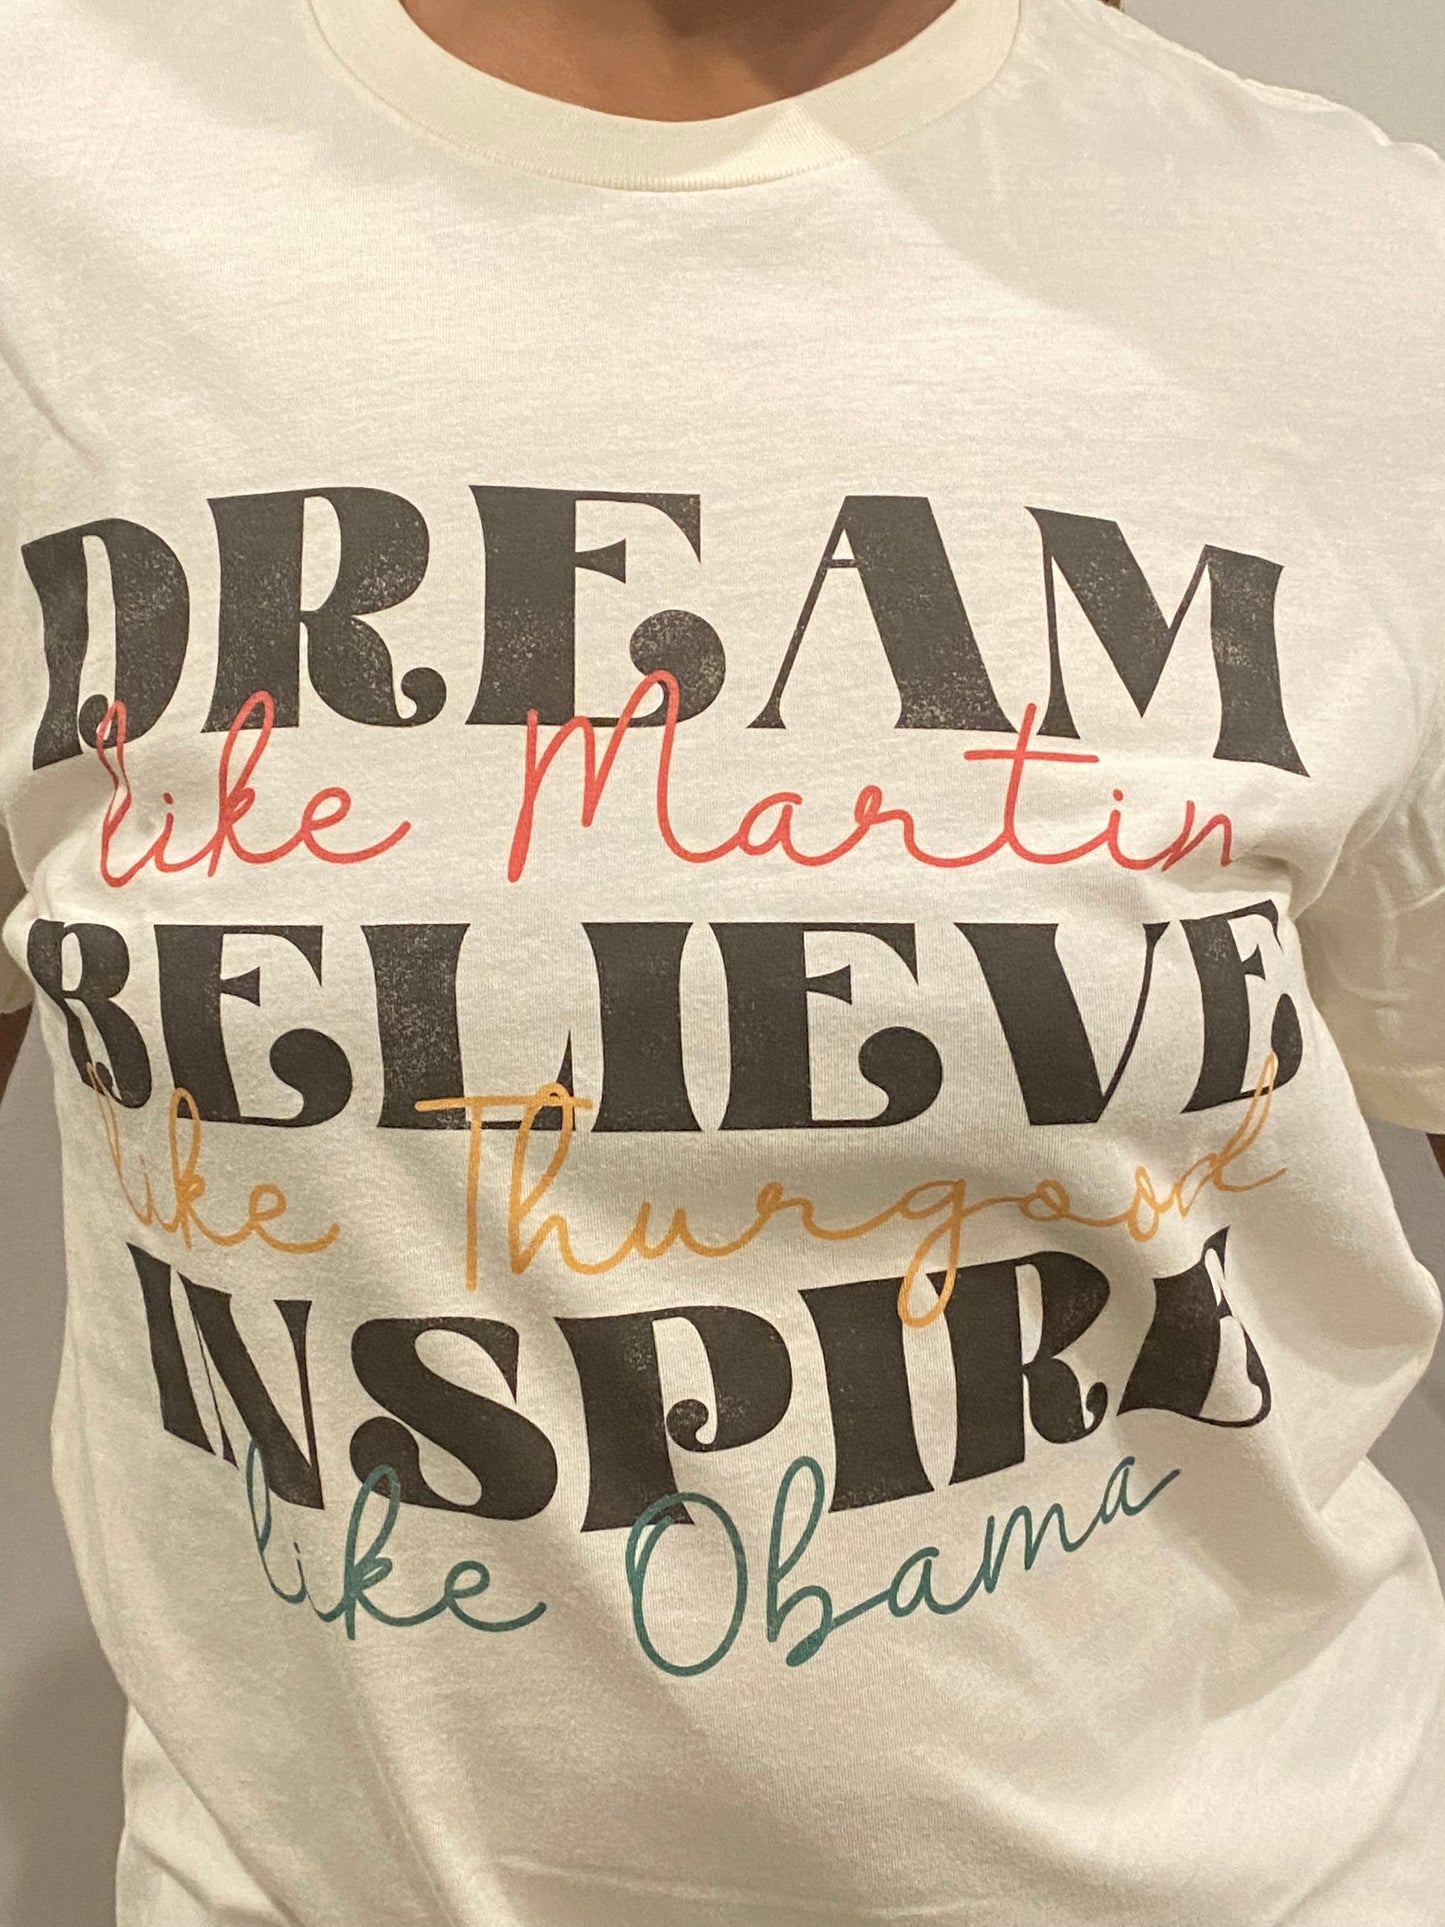 Dream T-Shirt